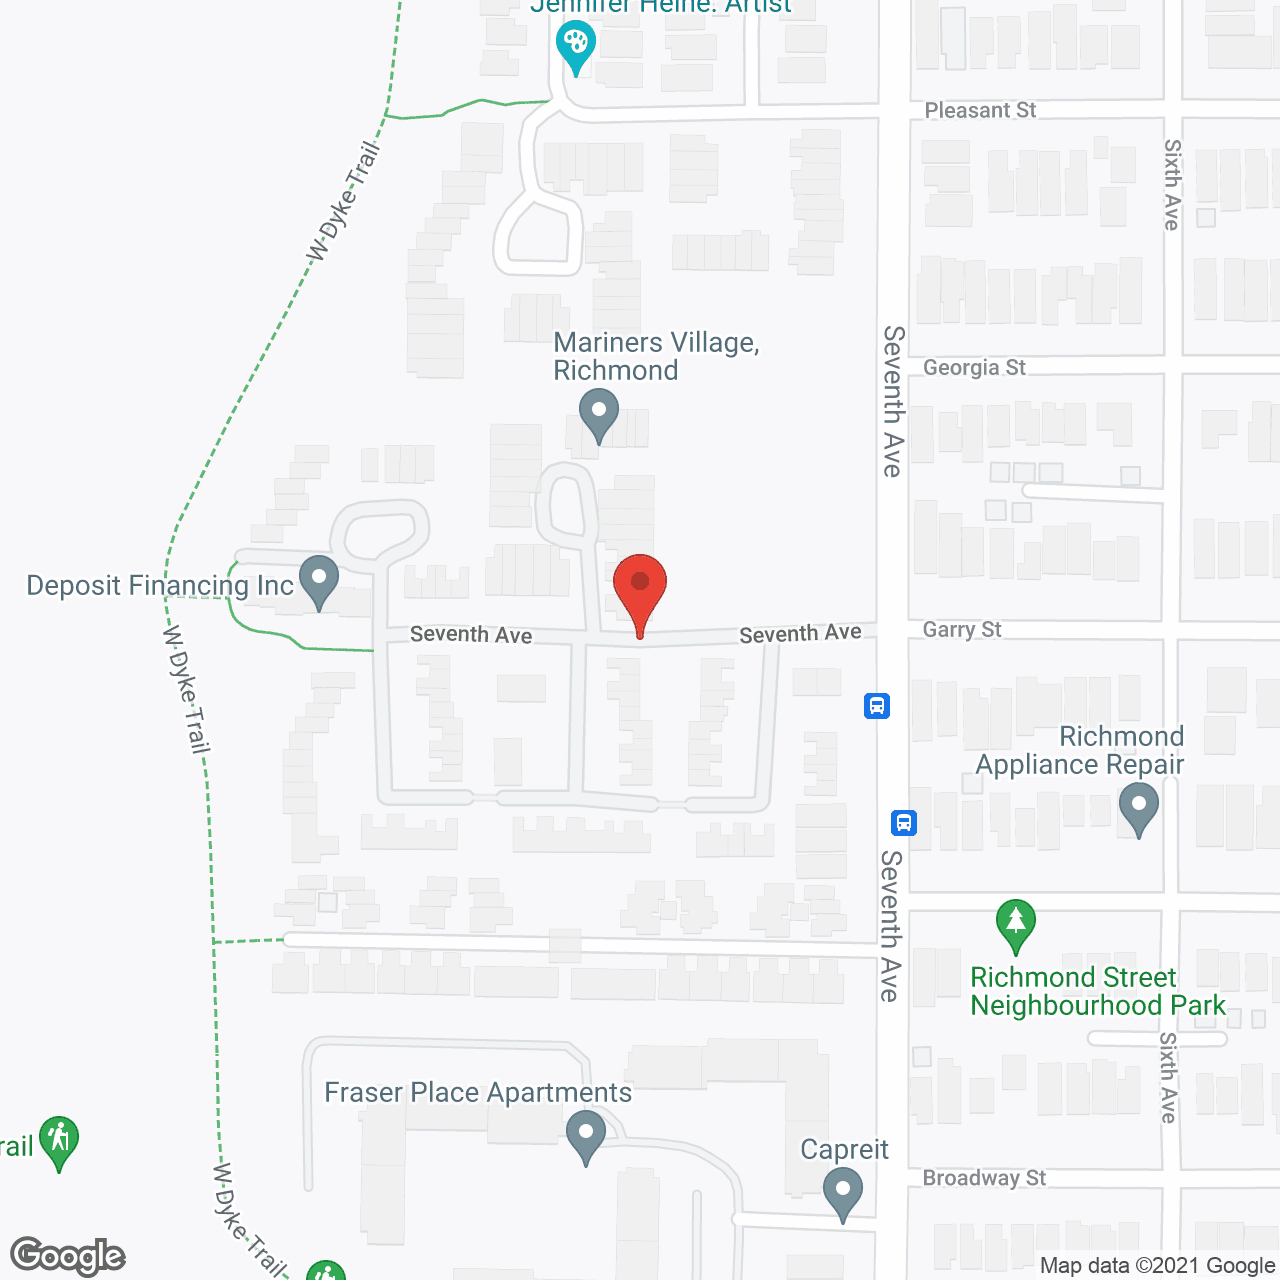 Garry Point Housing Co-Op in google map